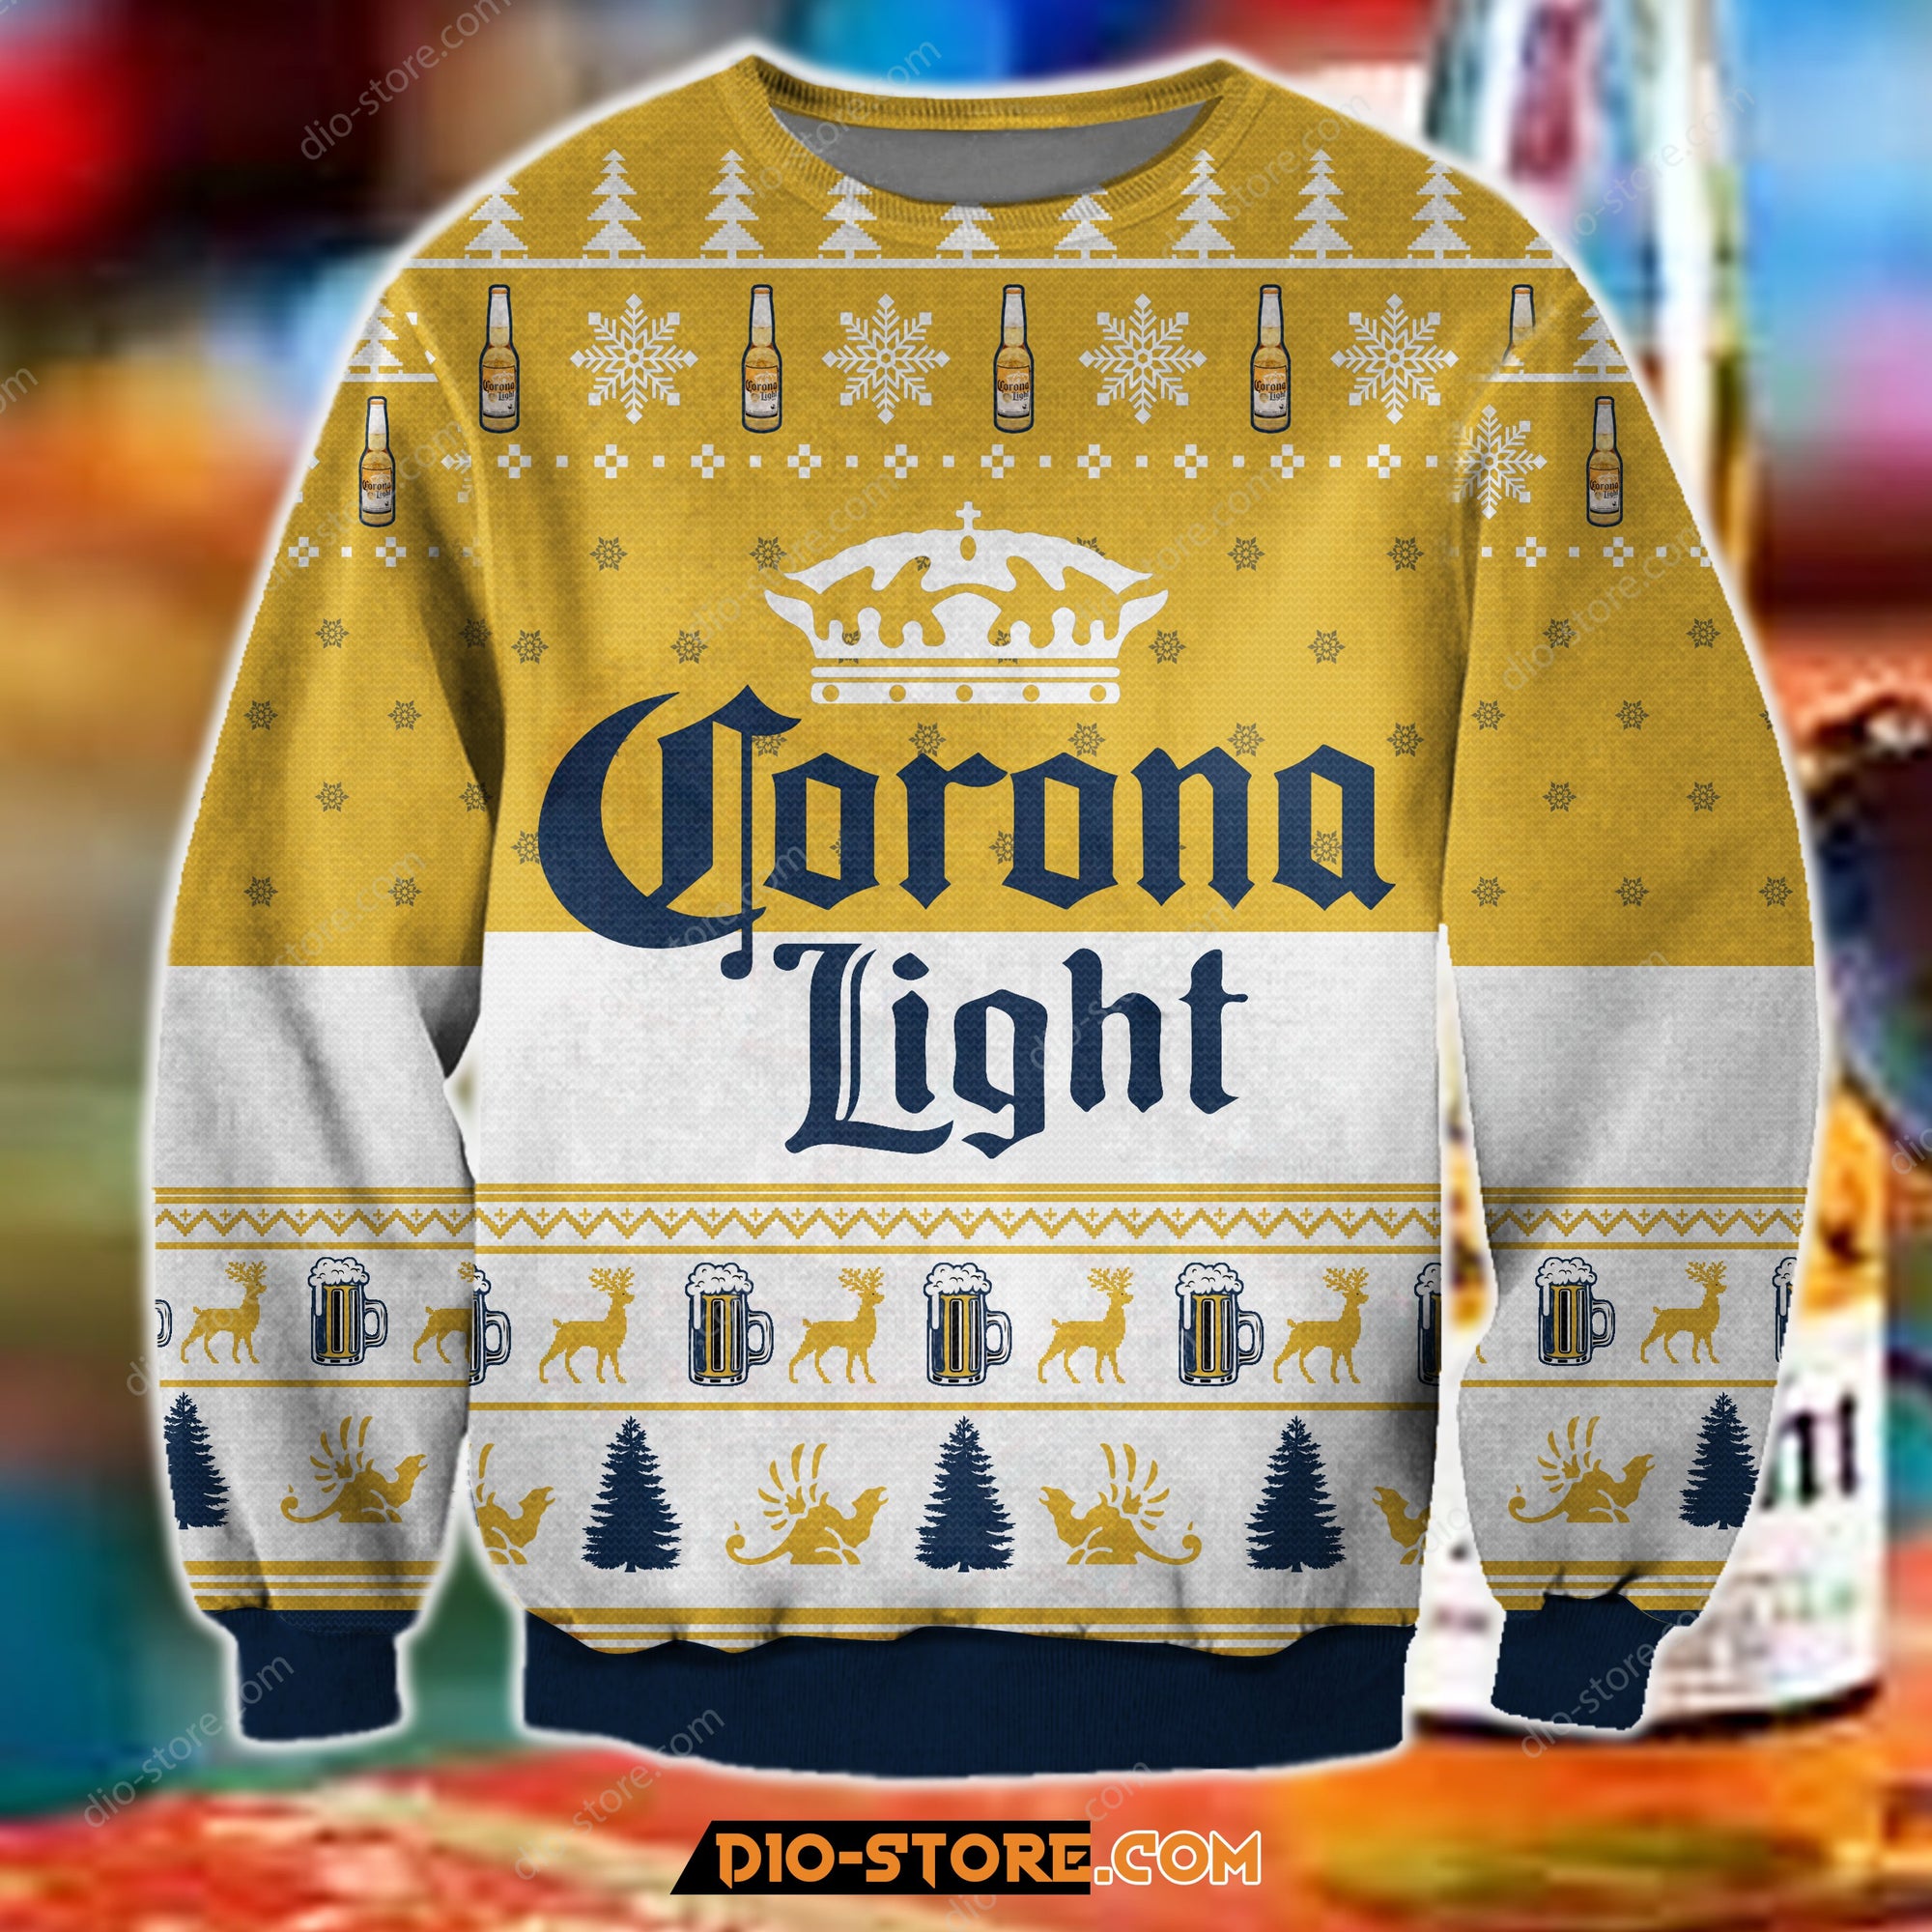 Corona Light Beer Knitting Pattern 3D Print Ugly Sweatshirt Hoodie All Over Printed Cint10400